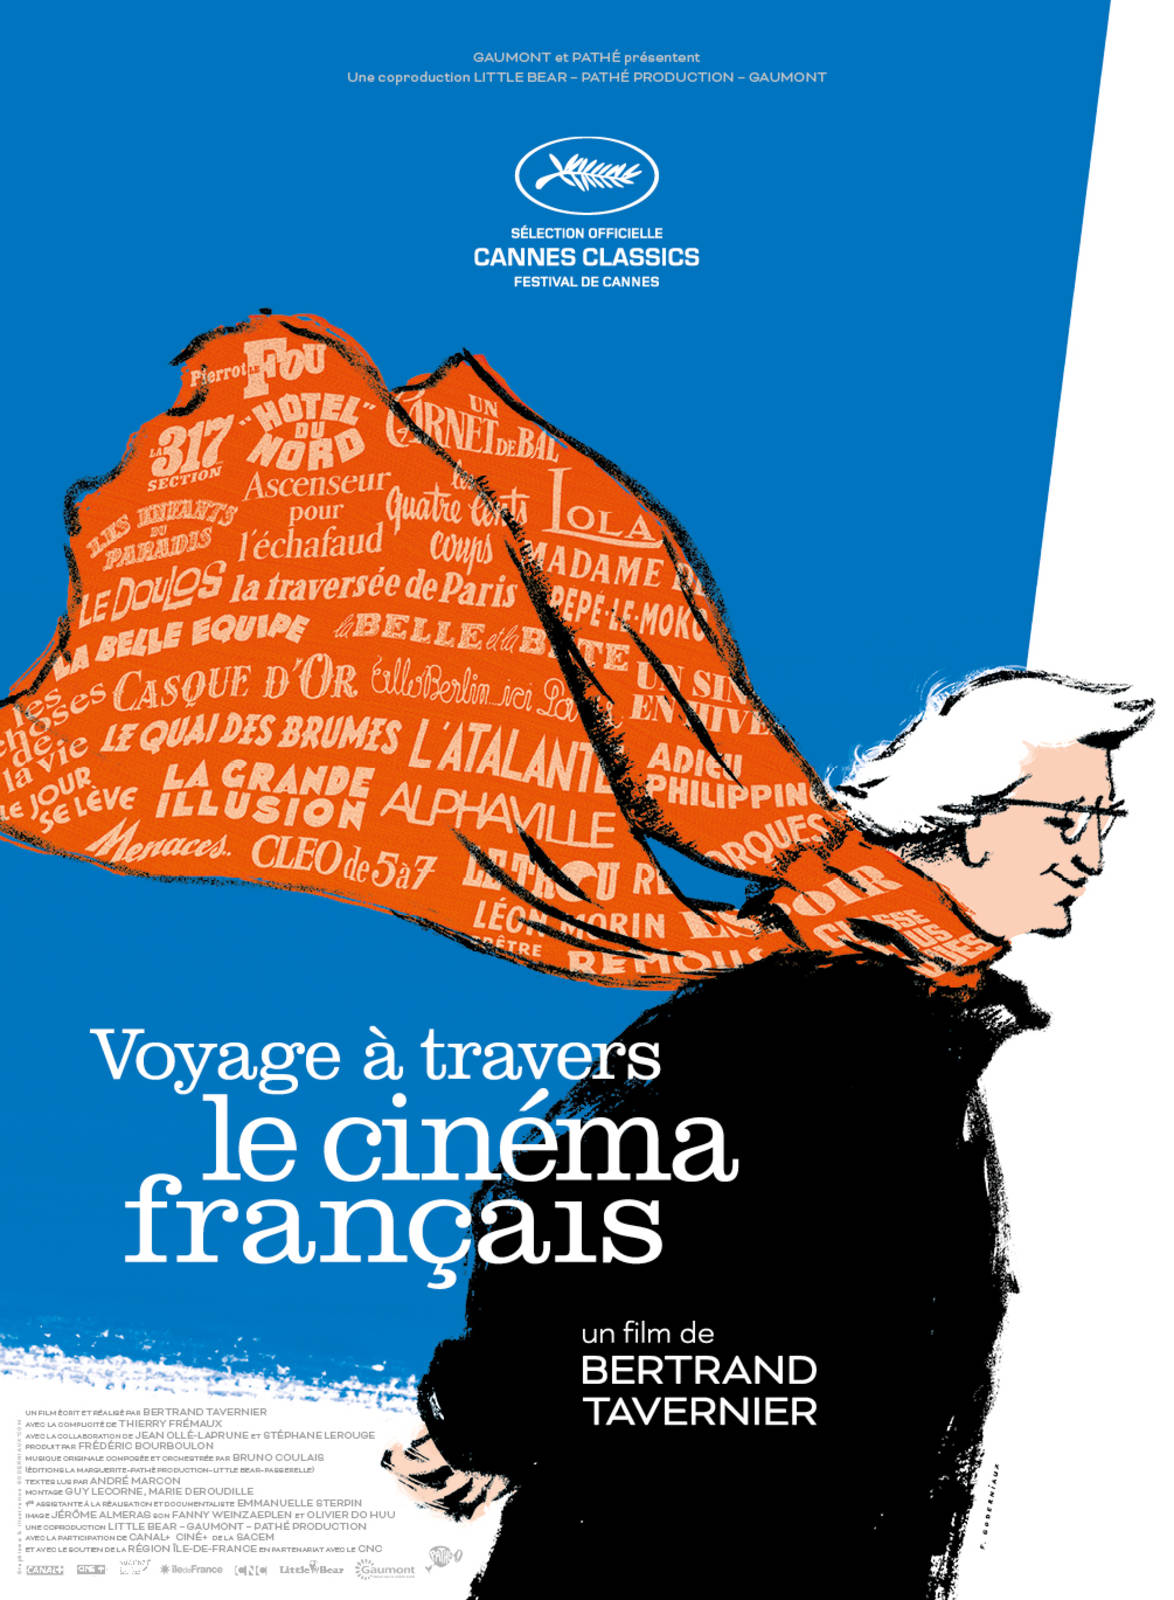 My Journey Through French Cinema Poster